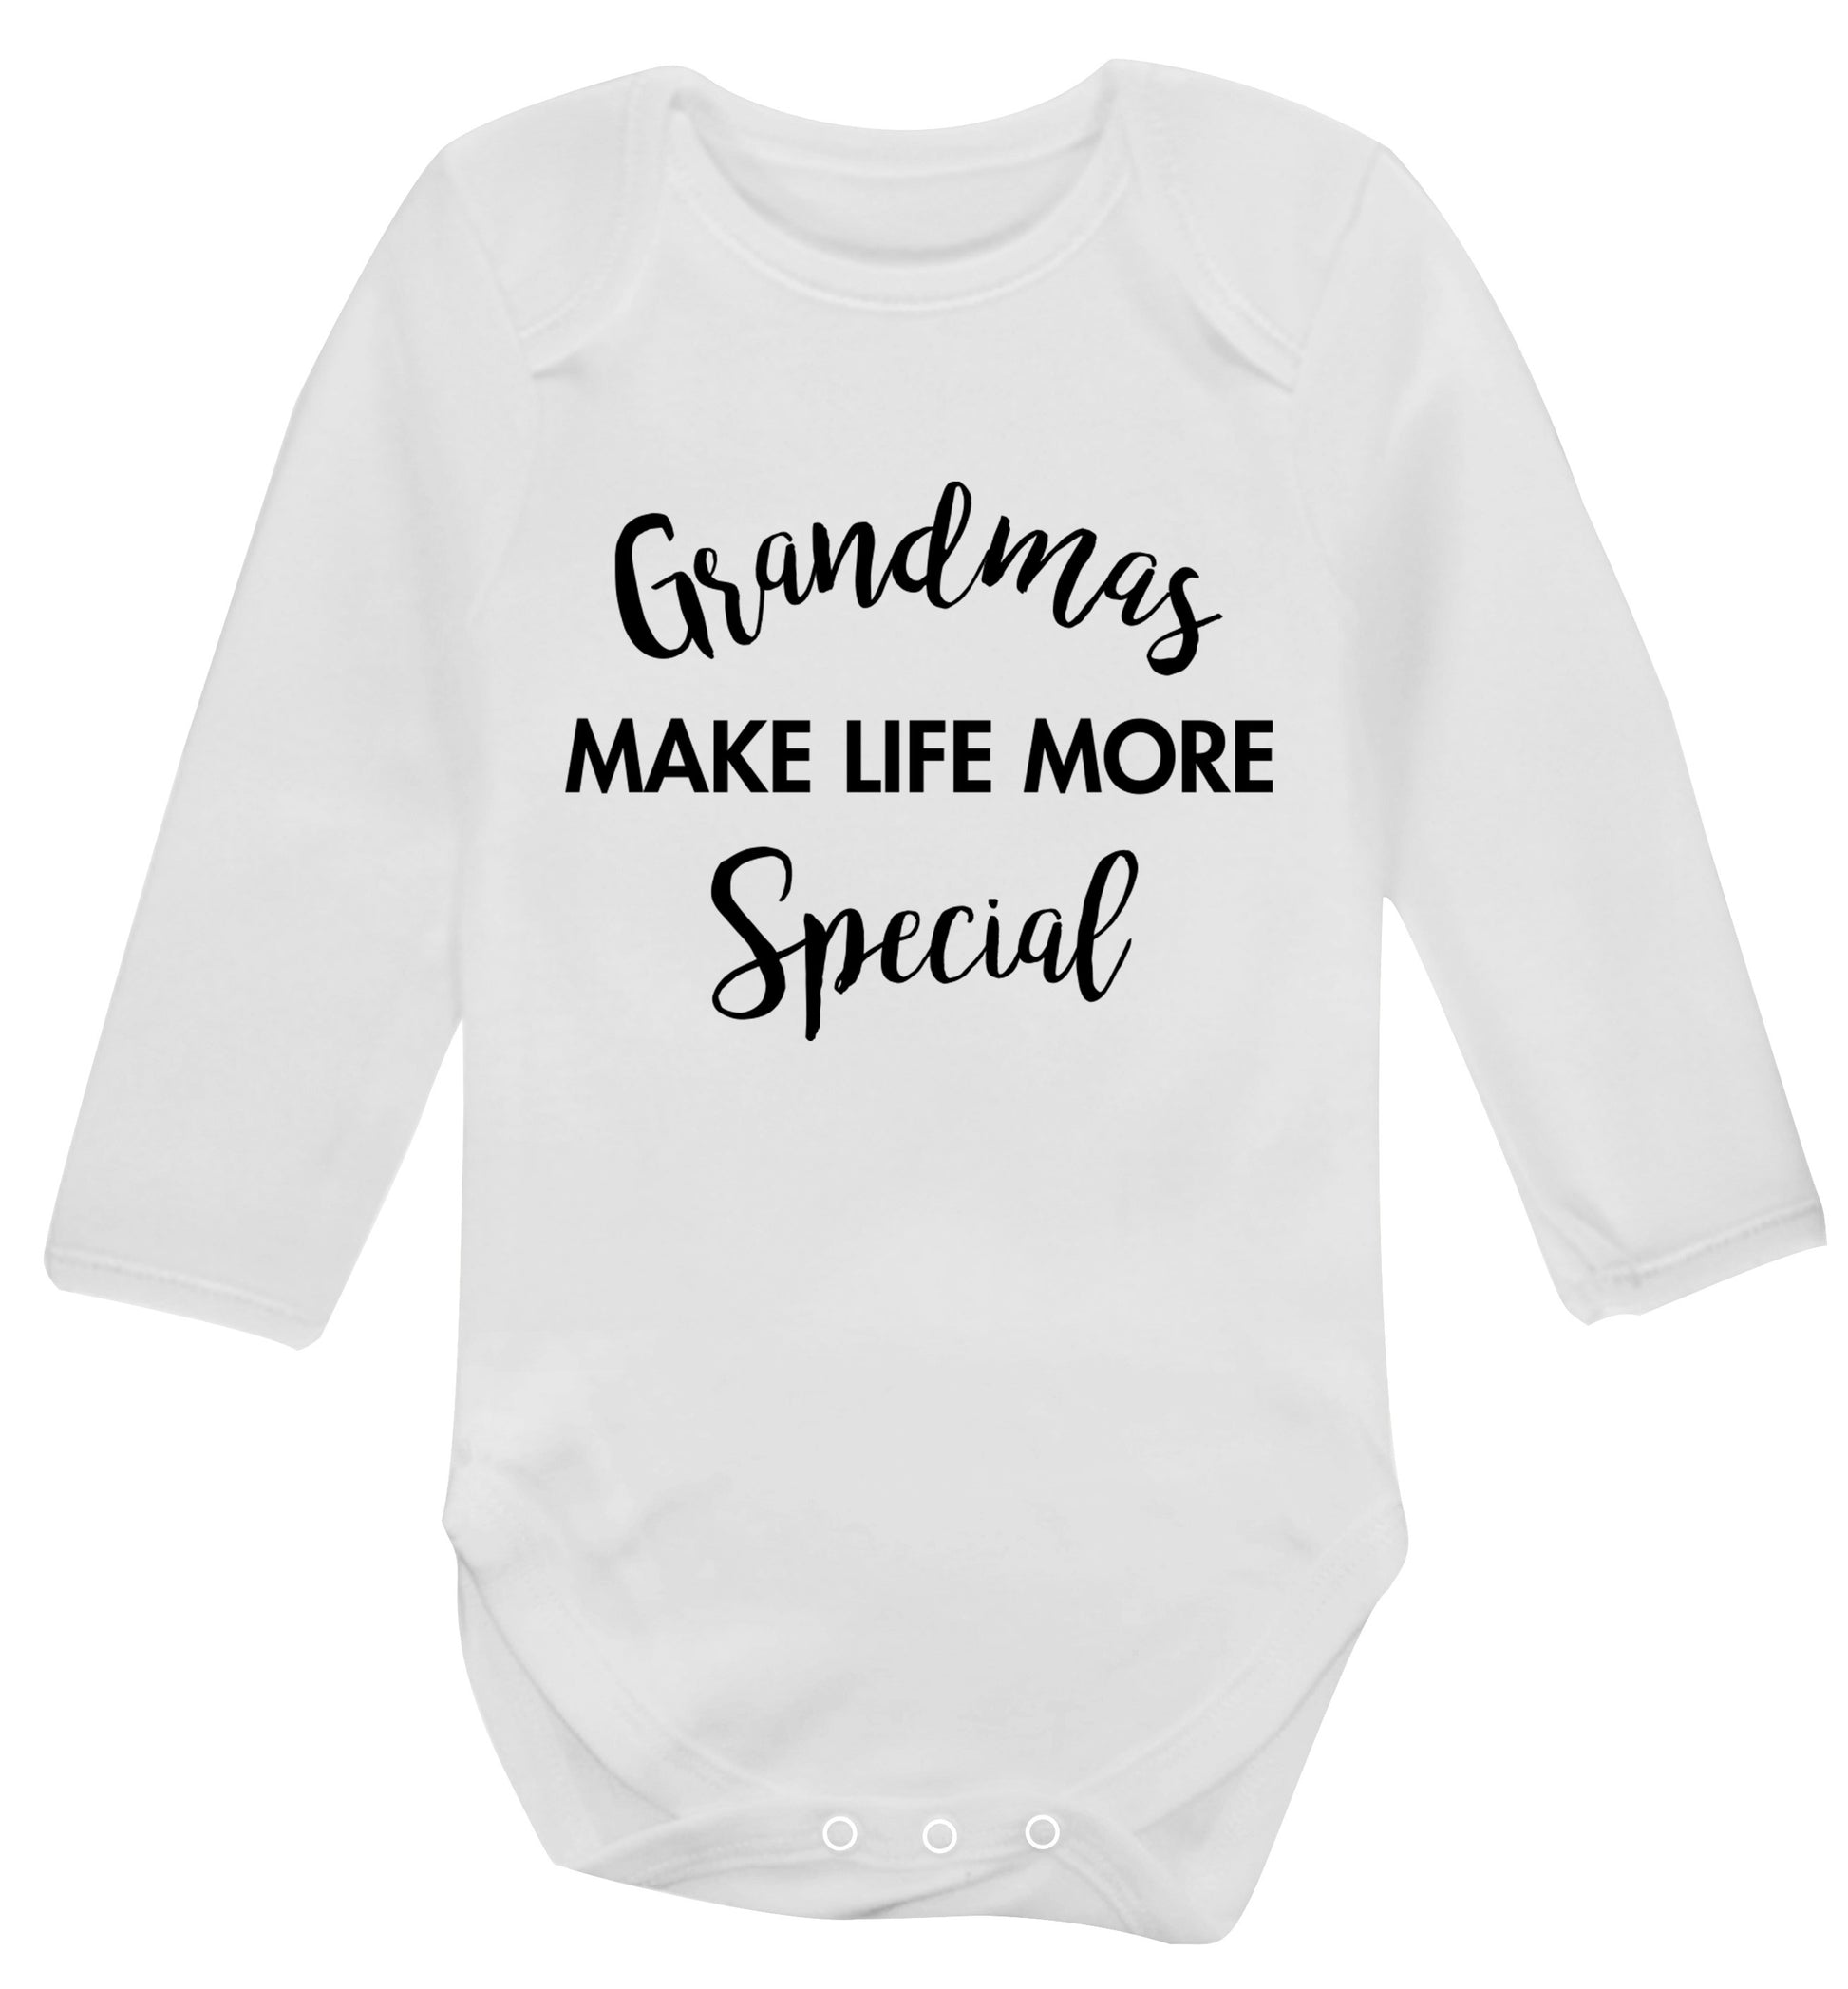 Grandmas make life more special Baby Vest long sleeved white 6-12 months